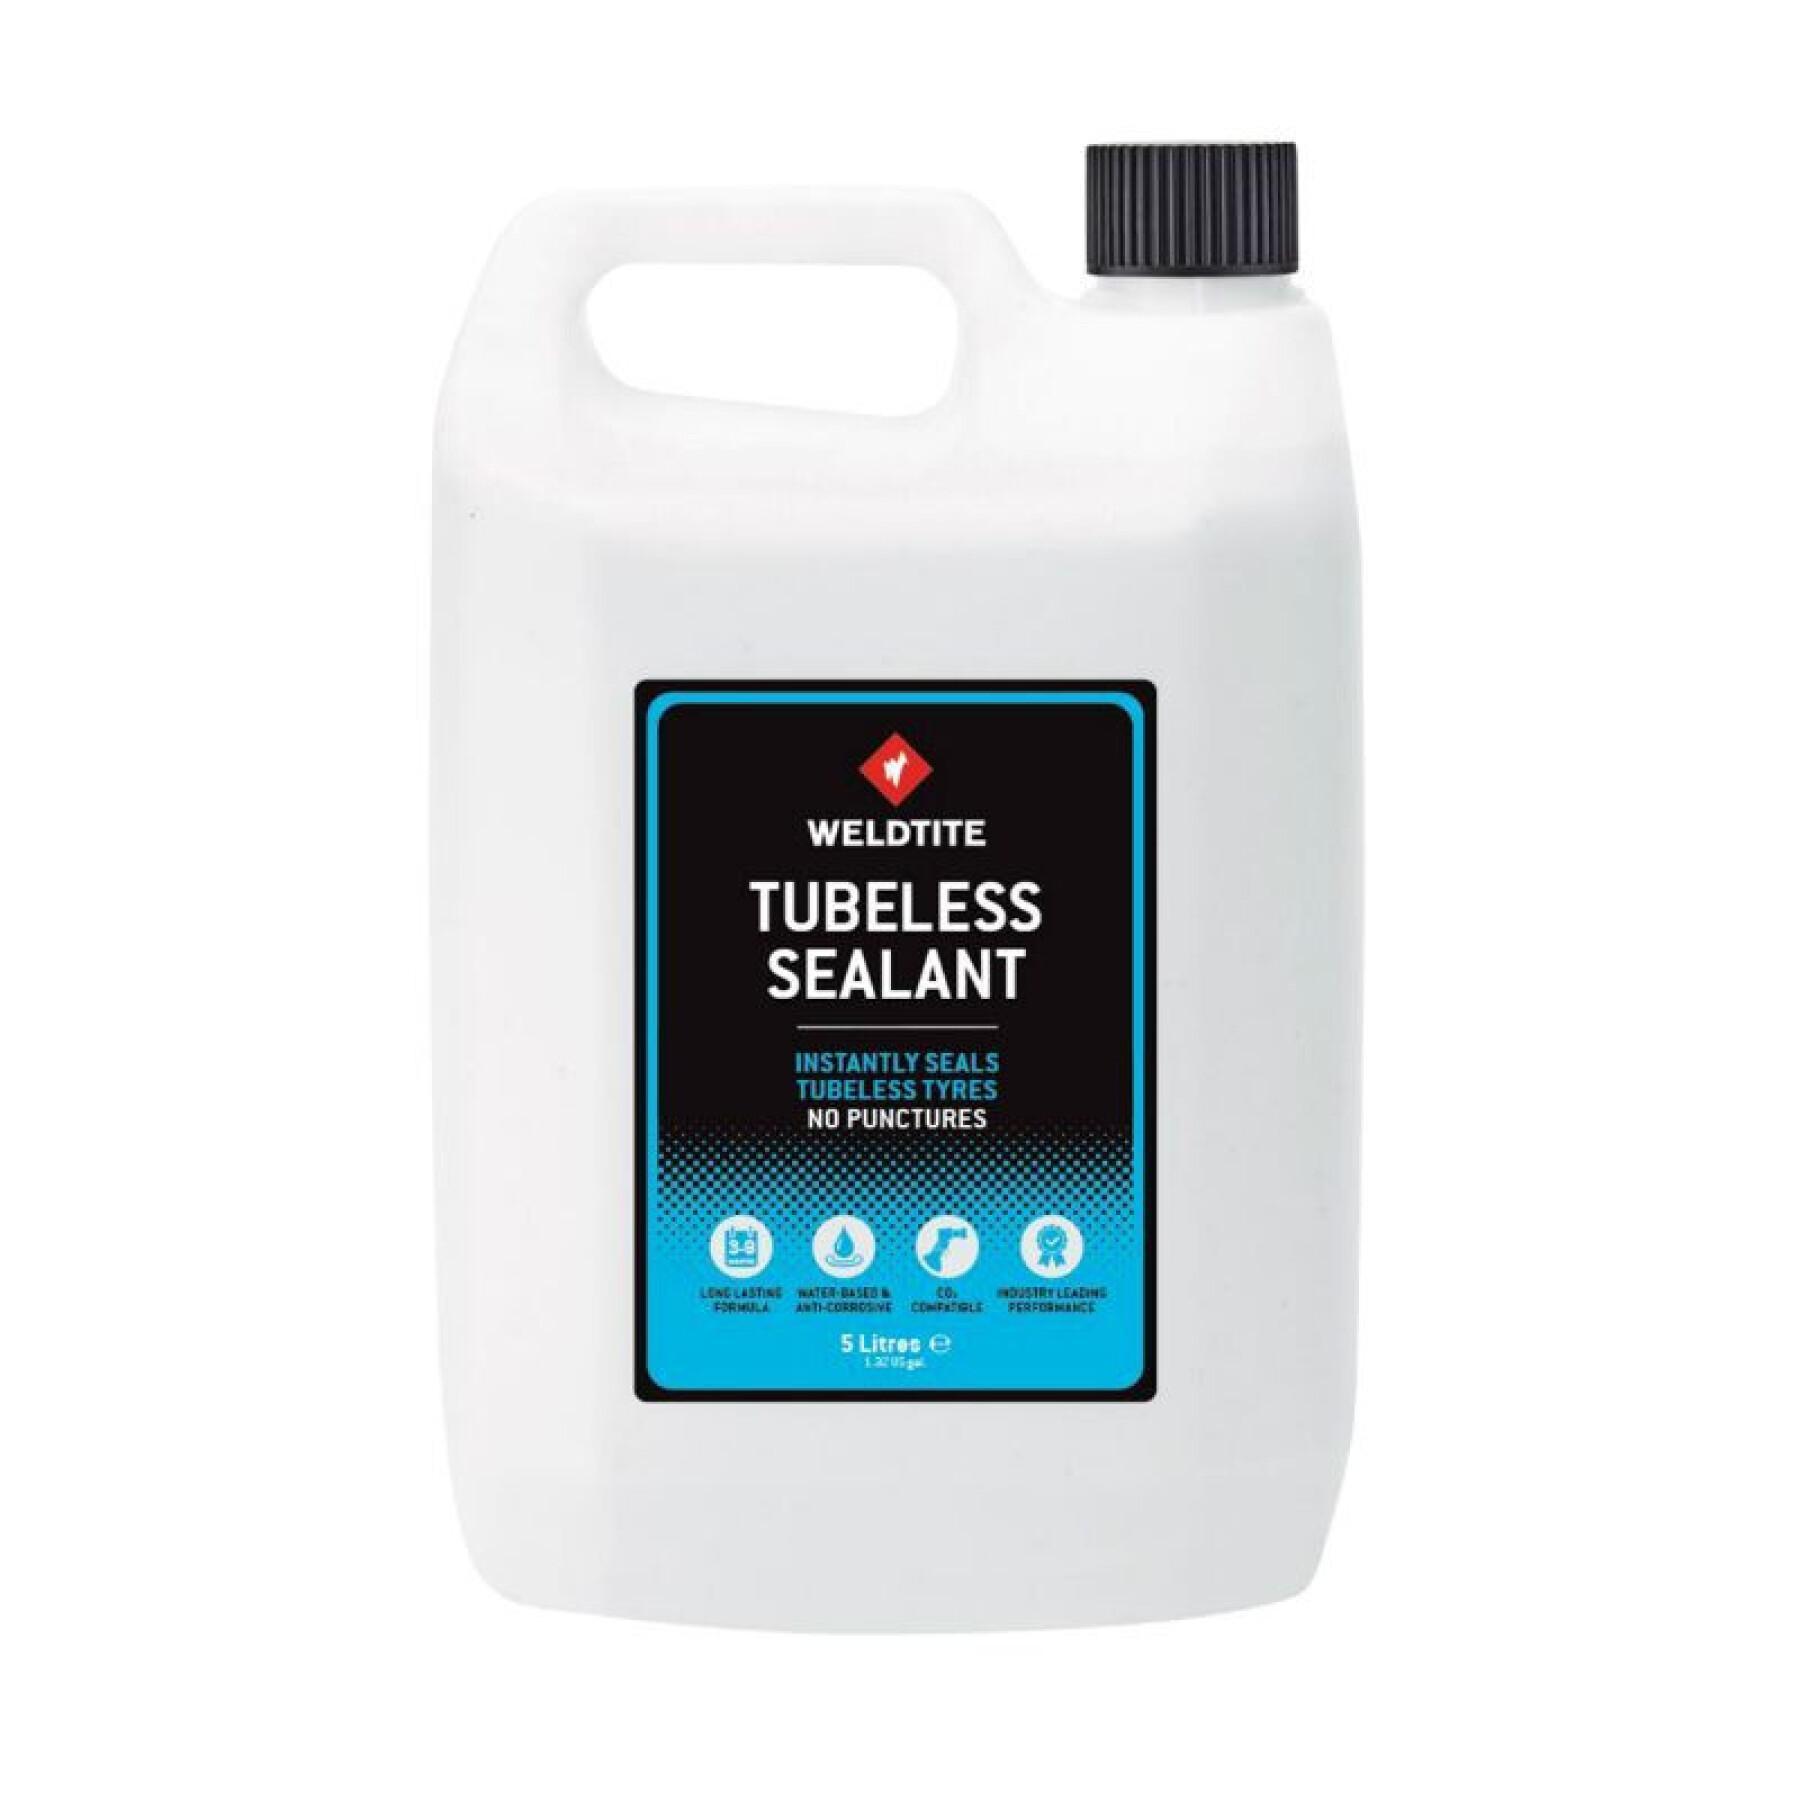 Preventive anti-puncture liquid for tubeless Weldtite